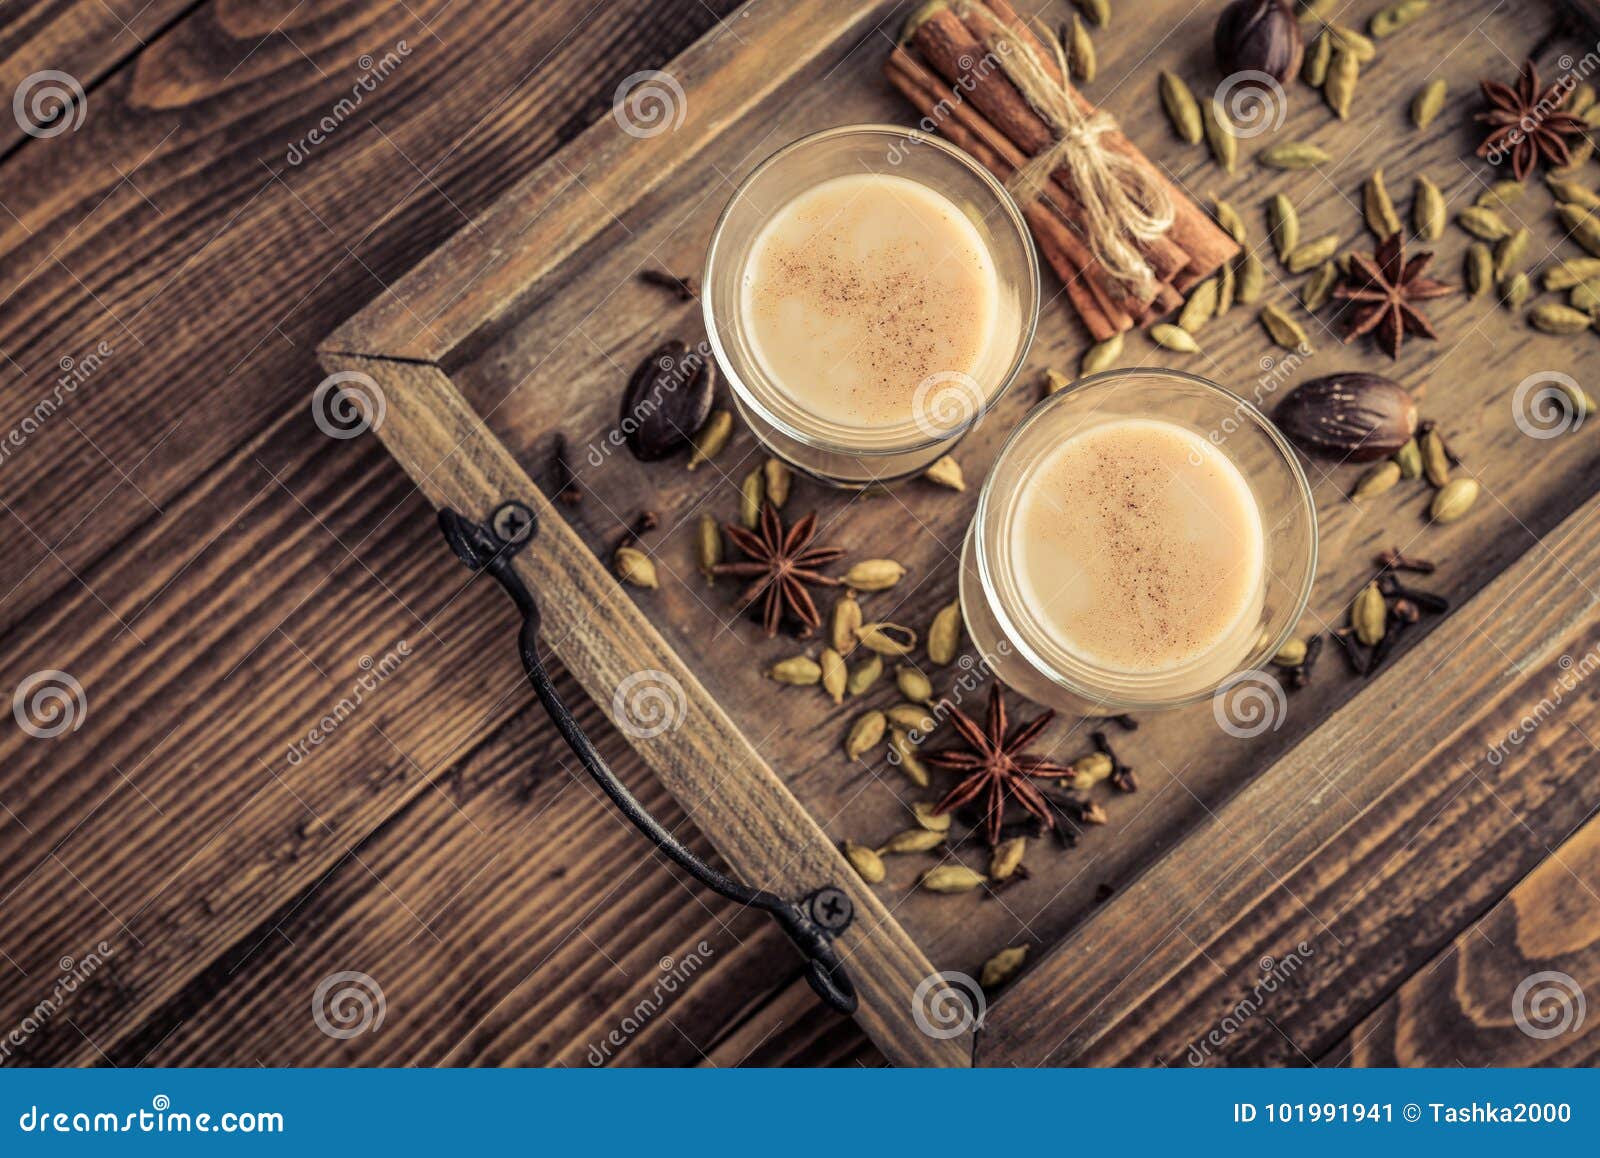 Traditional Indian Drink - Masala Chai Tea Stock Image - Image of ...